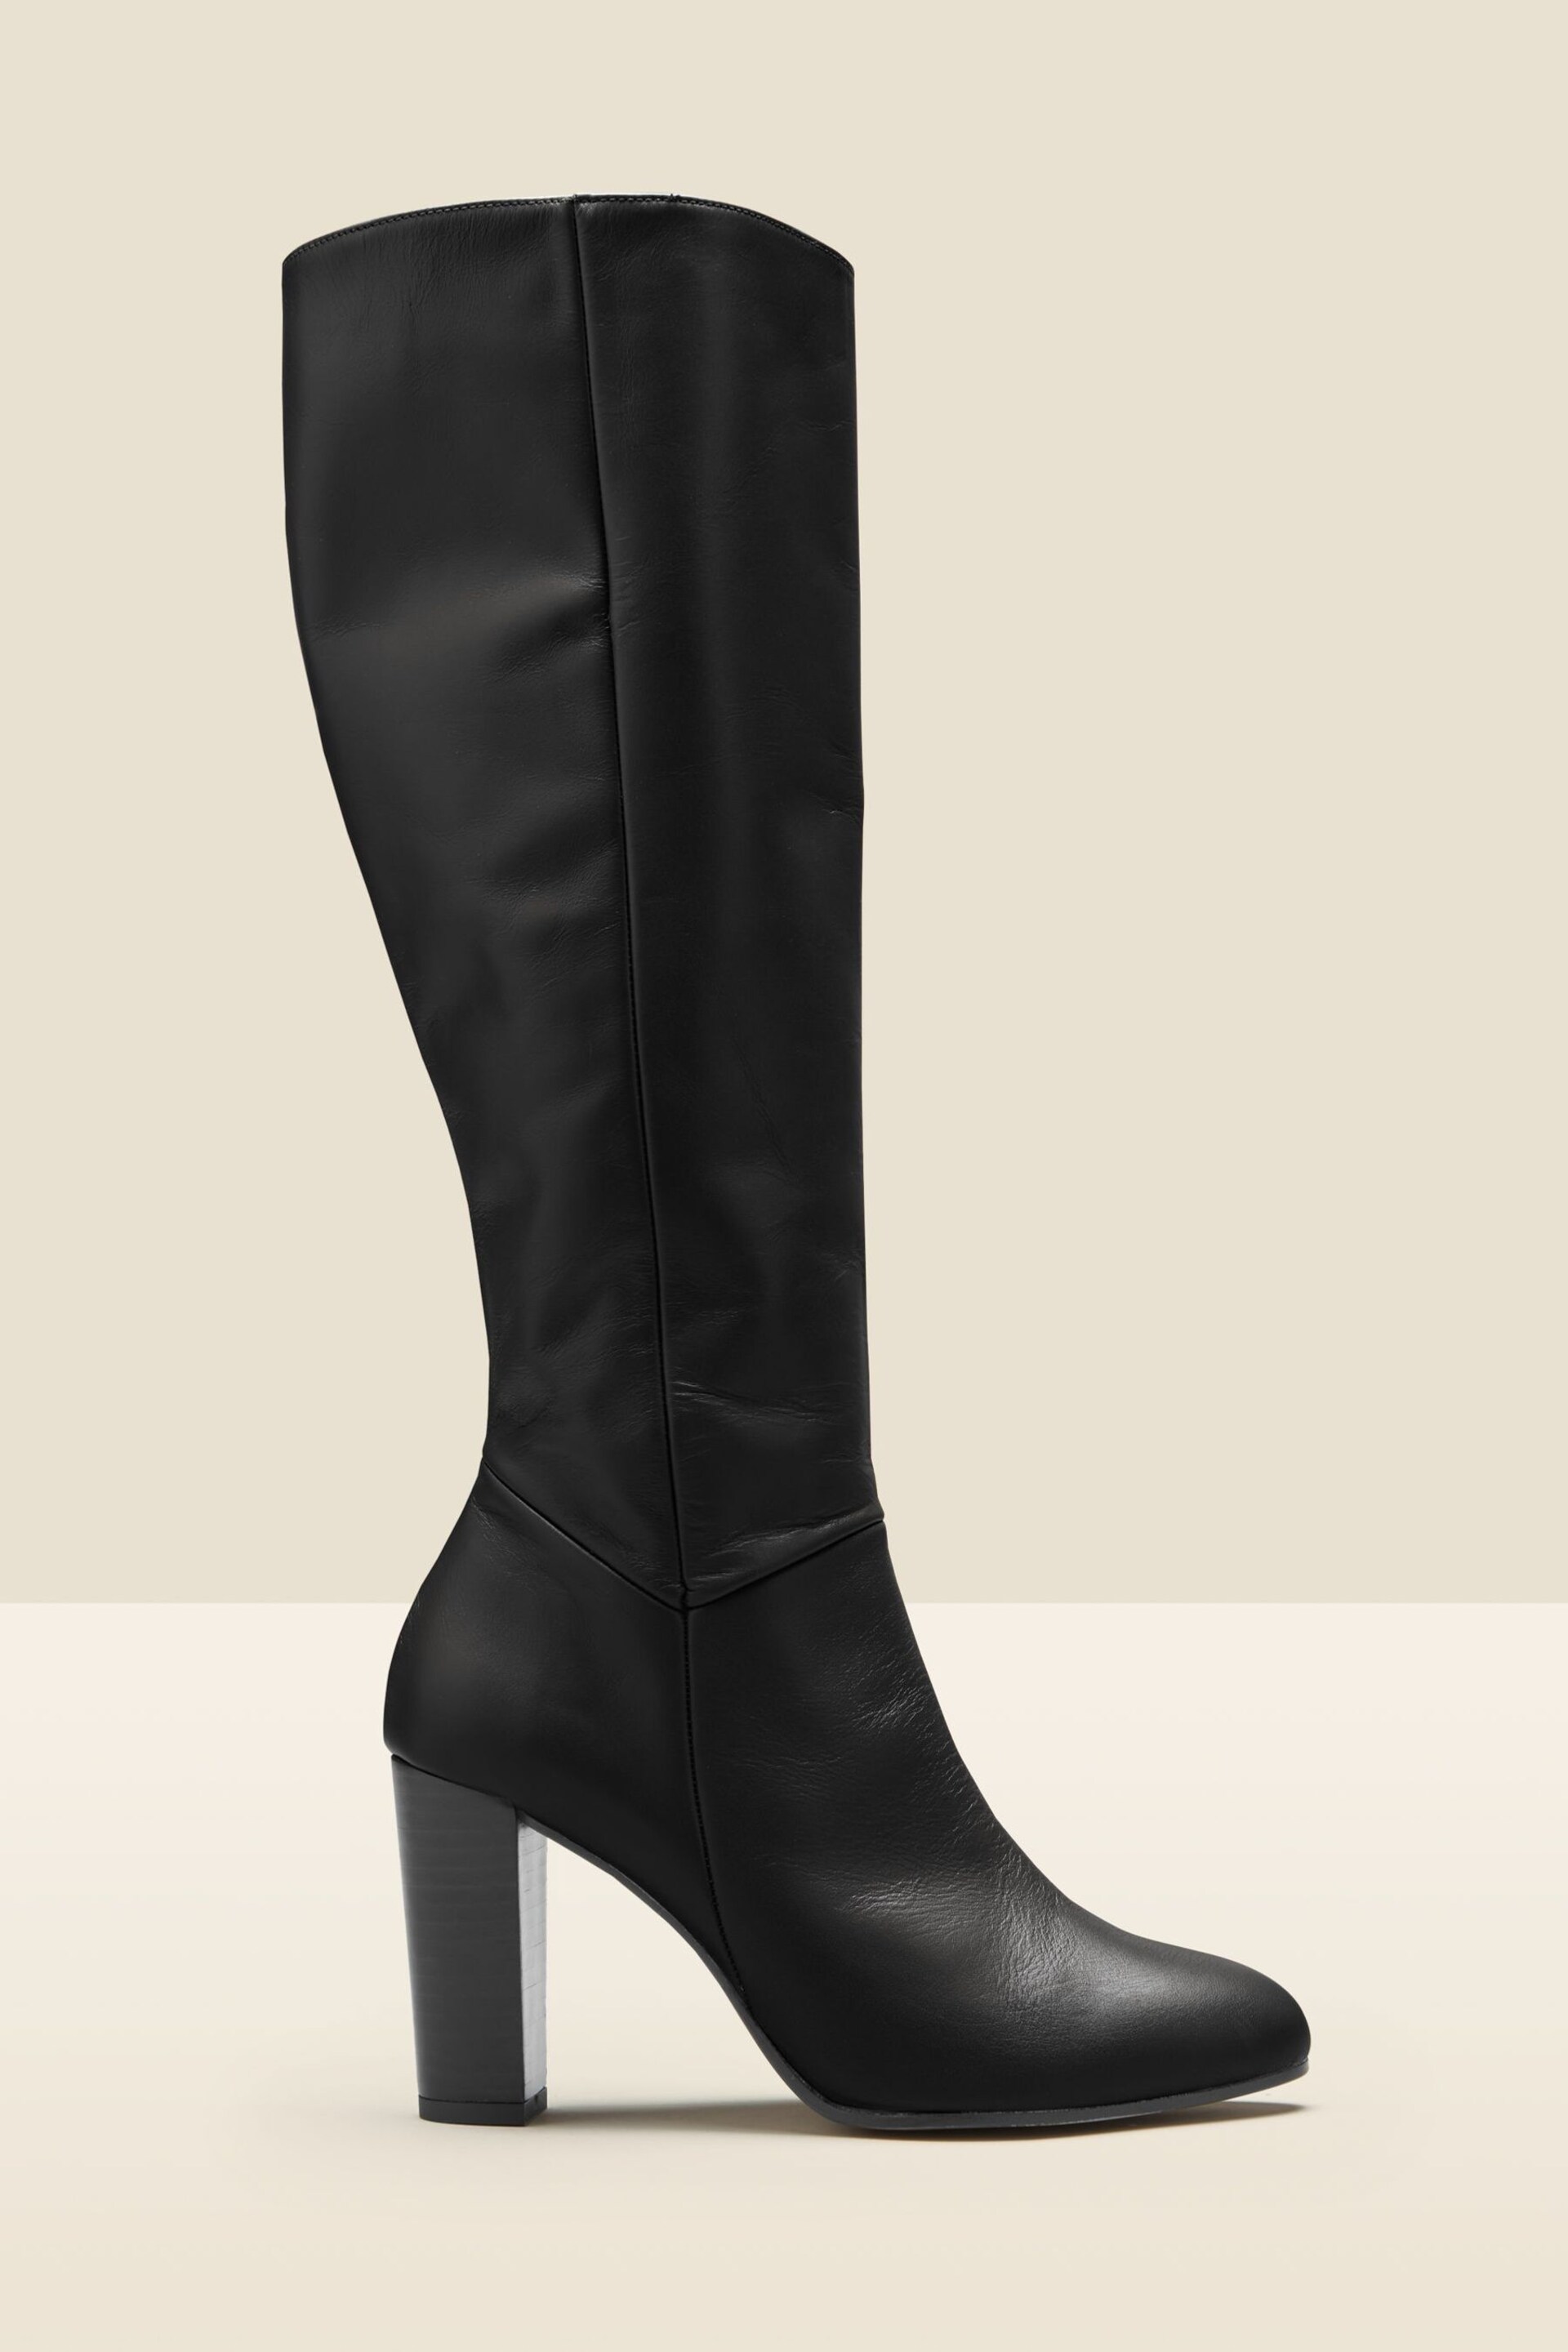 Sosandar Black Leather Zip Knee High Boots - Image 1 of 2